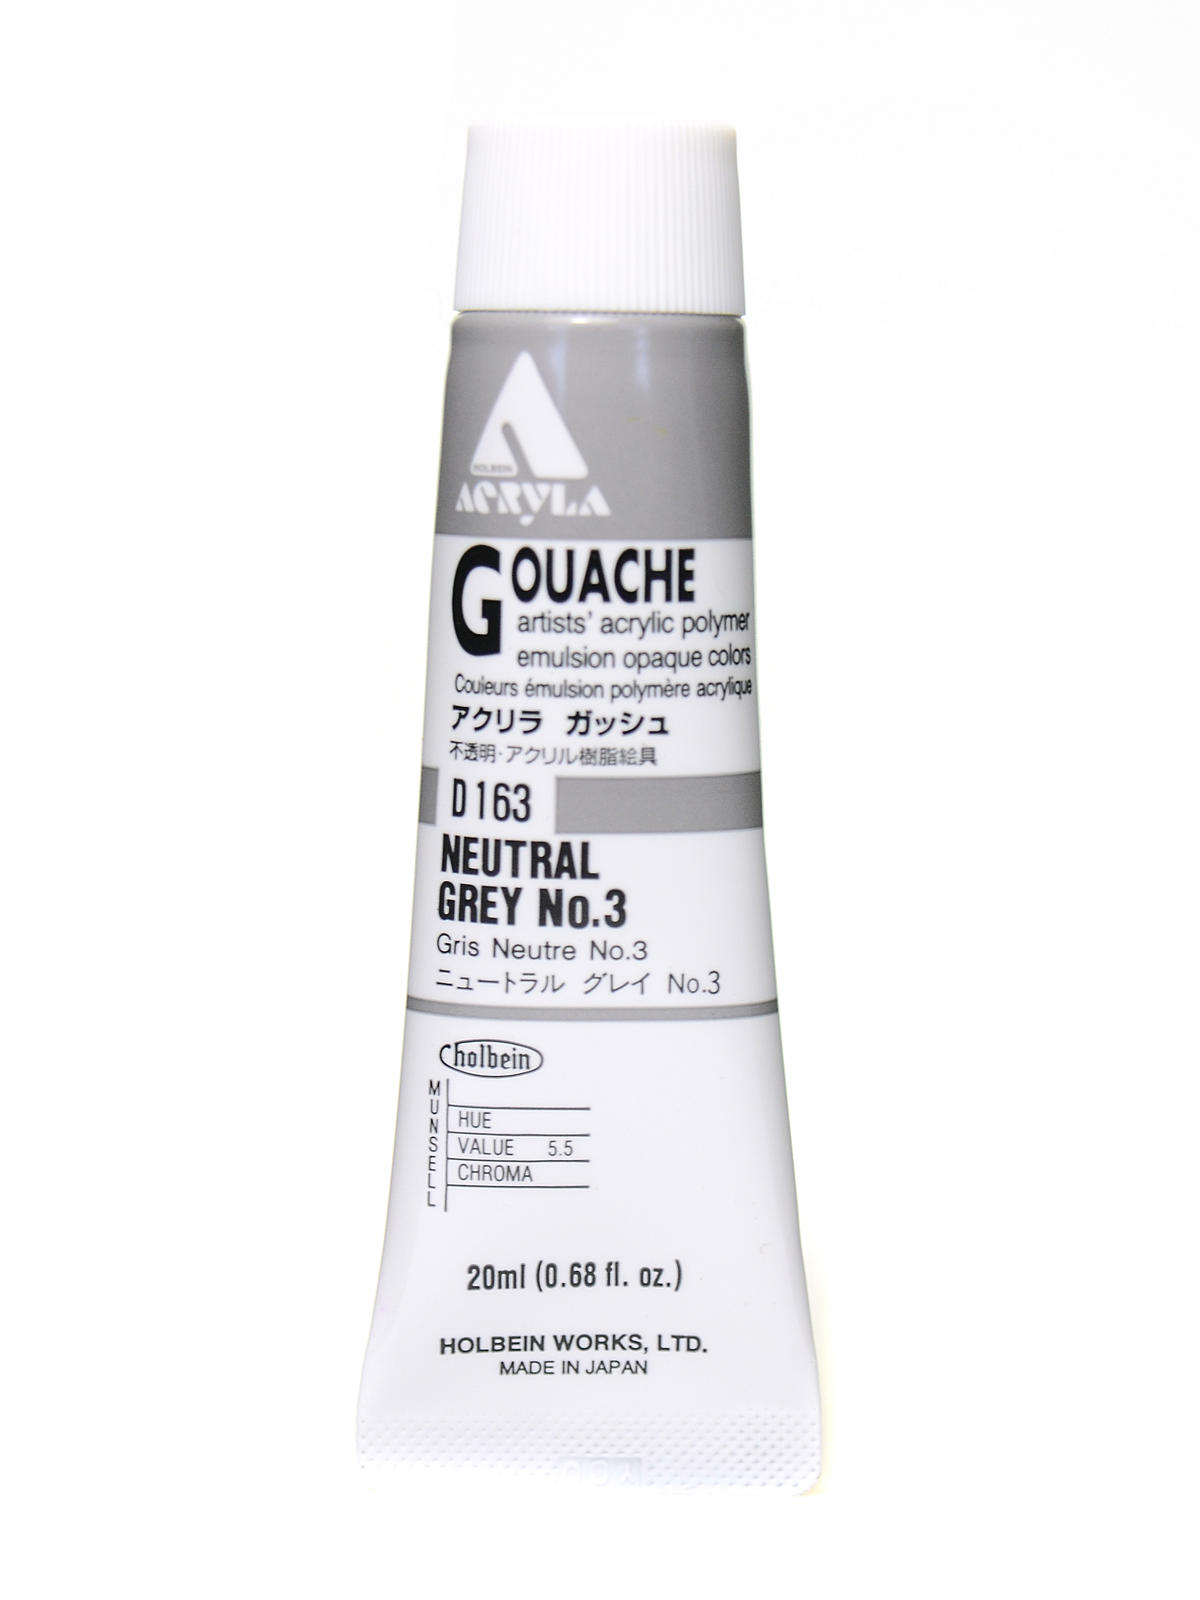 Acryla Gouache 20 Ml Neutral Grey #3